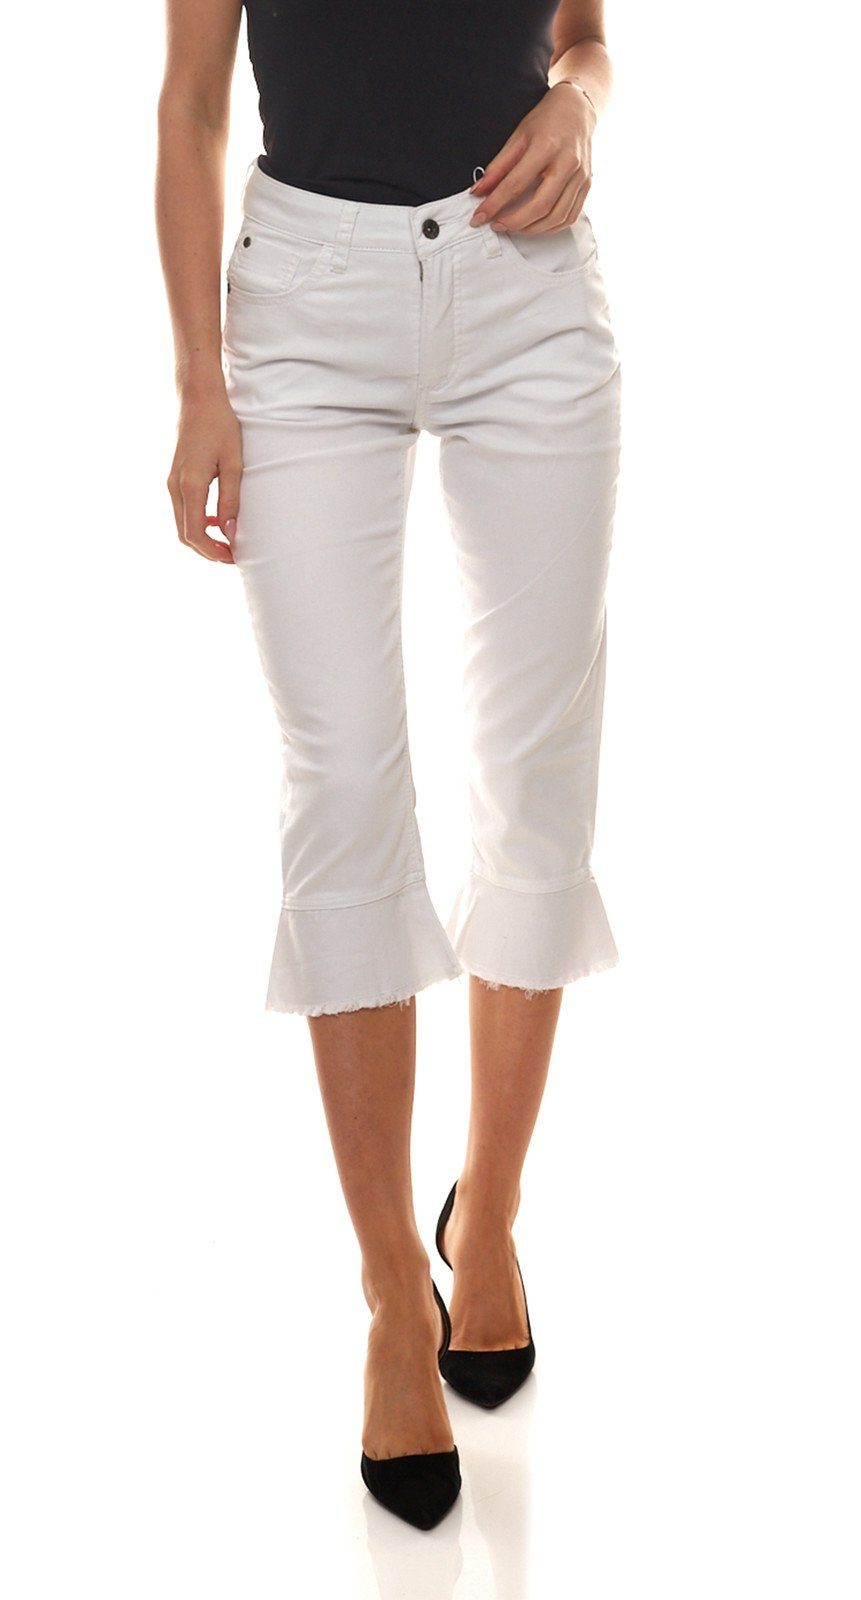 Vision Fitness CLAIRE WOMAN Caprihose WOMAN modische Stoff-Hose Capri-Jeans Volant CLAIRE ausgefranstem Weiß Freizeit-Hose mit Damen